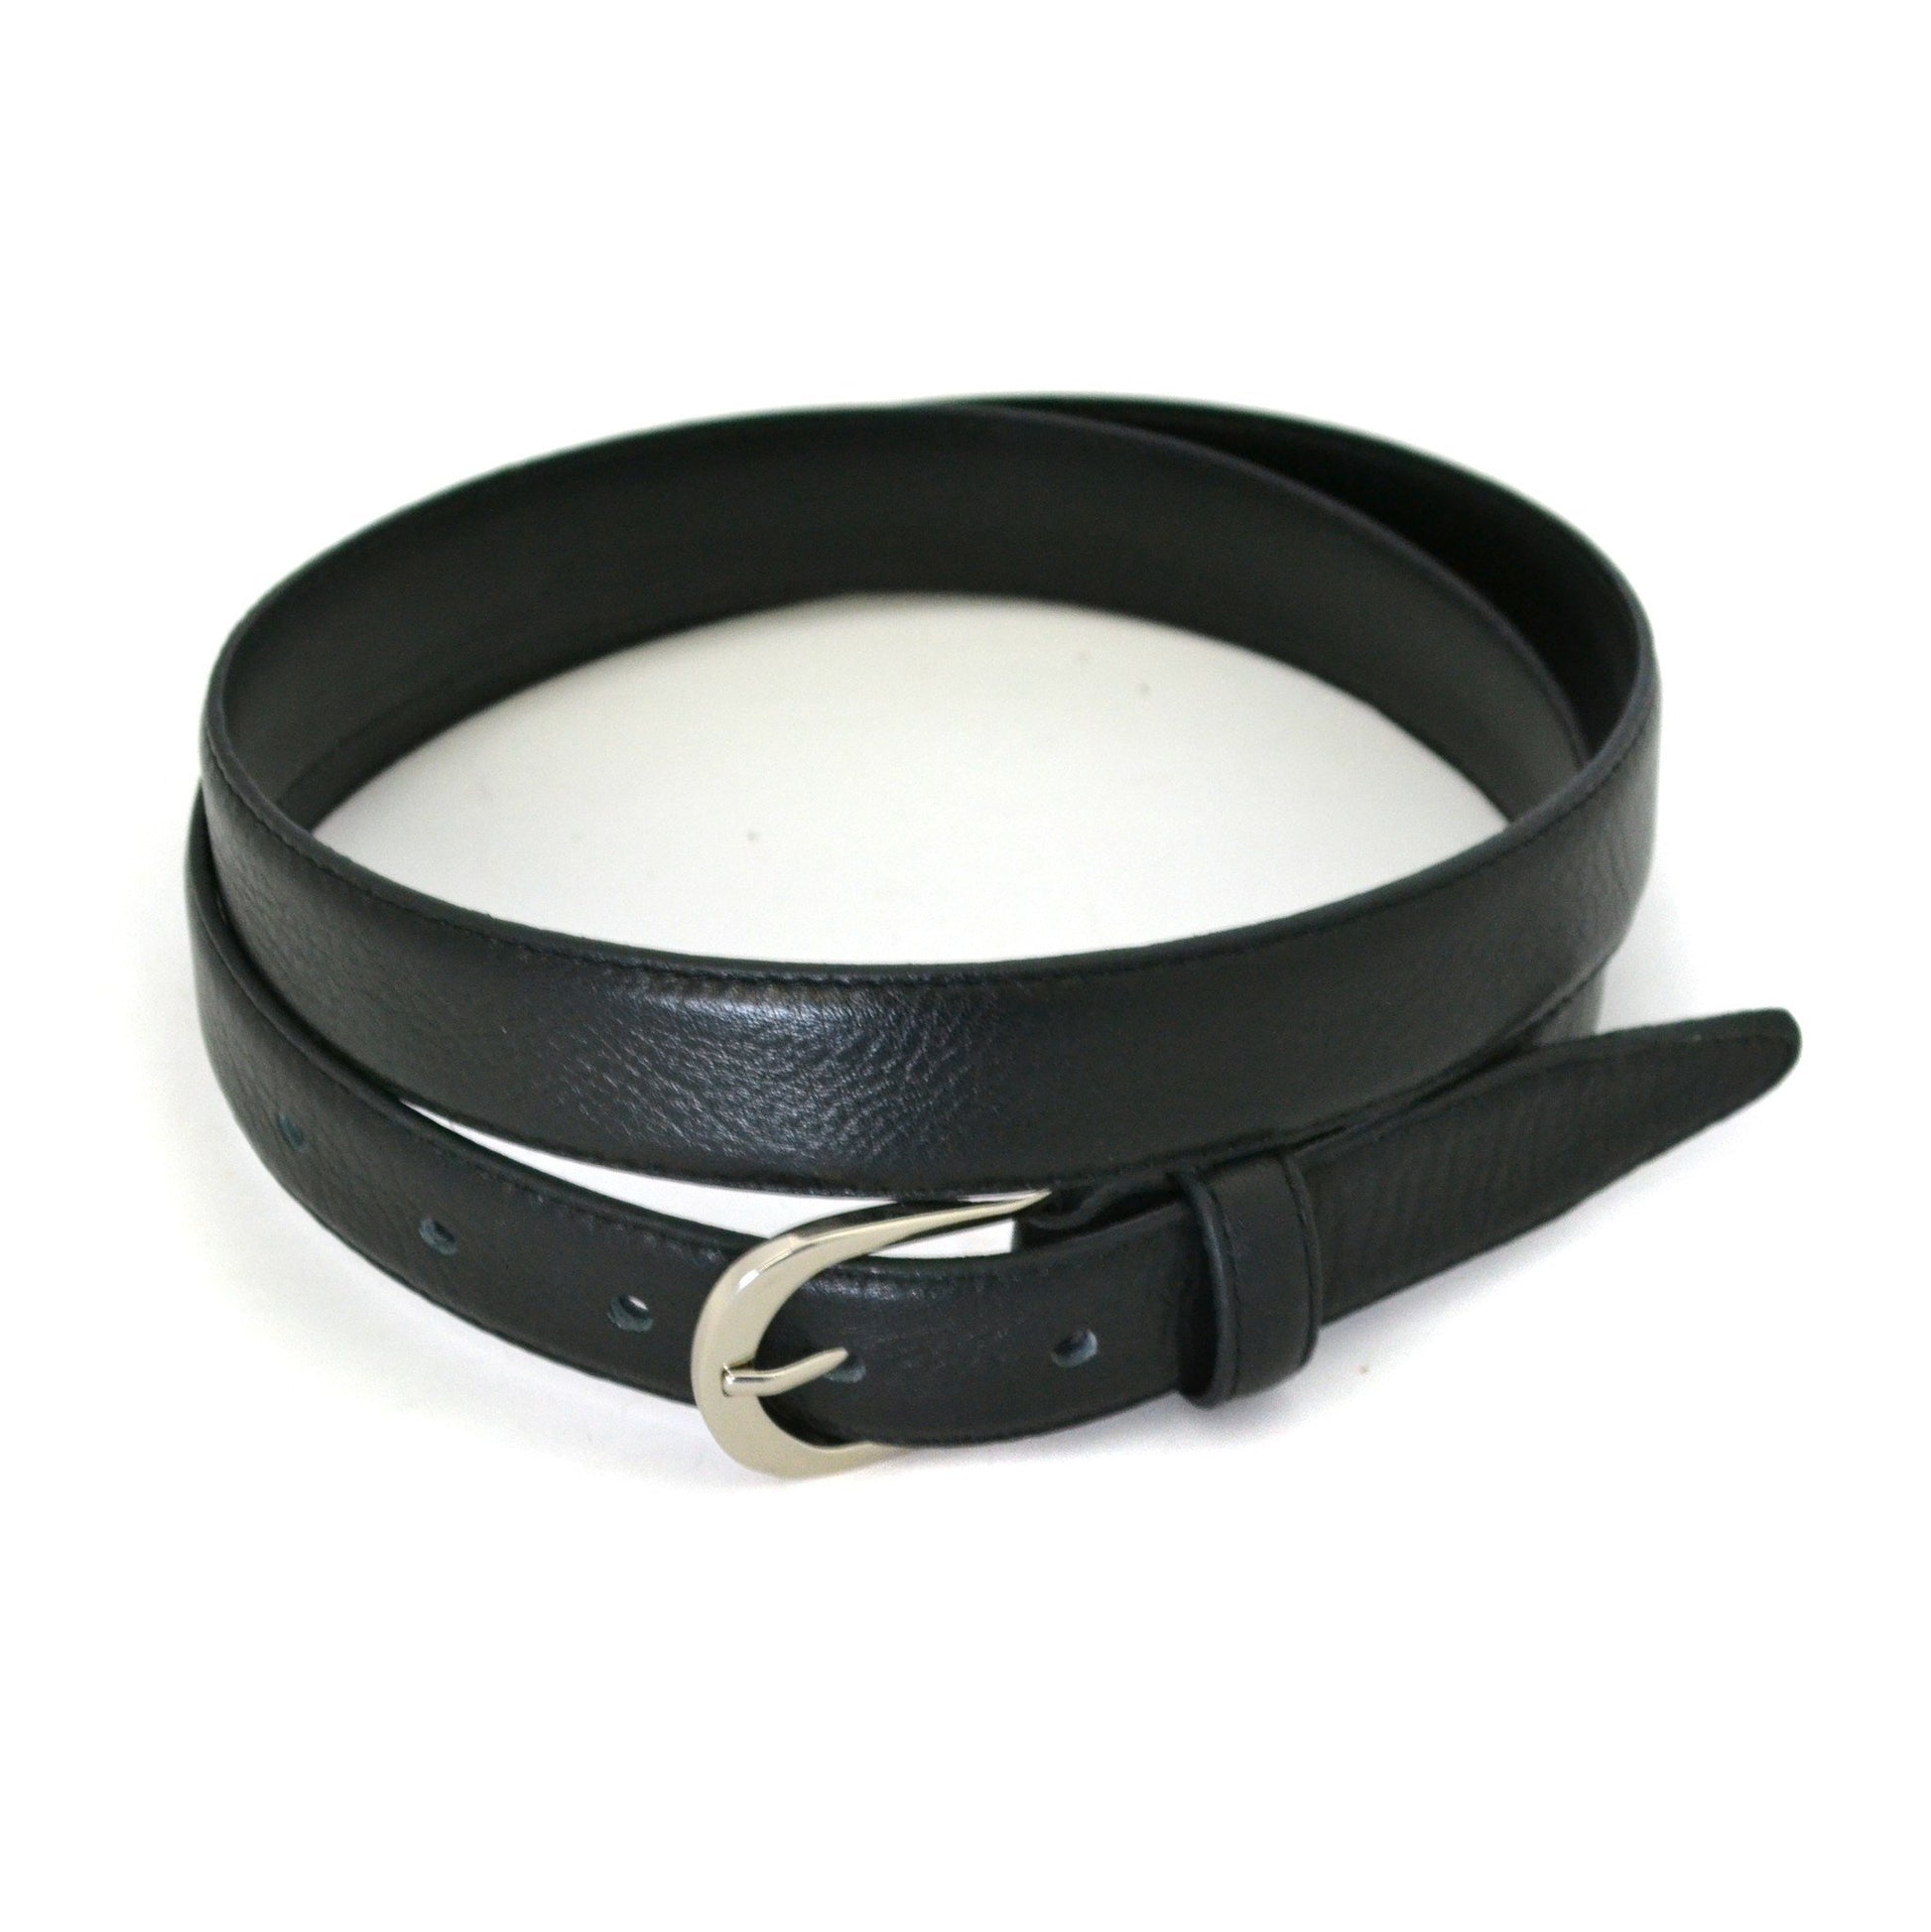 CARLOS - Mens Black Genuine Leather Belt – The Fitting Belt Company